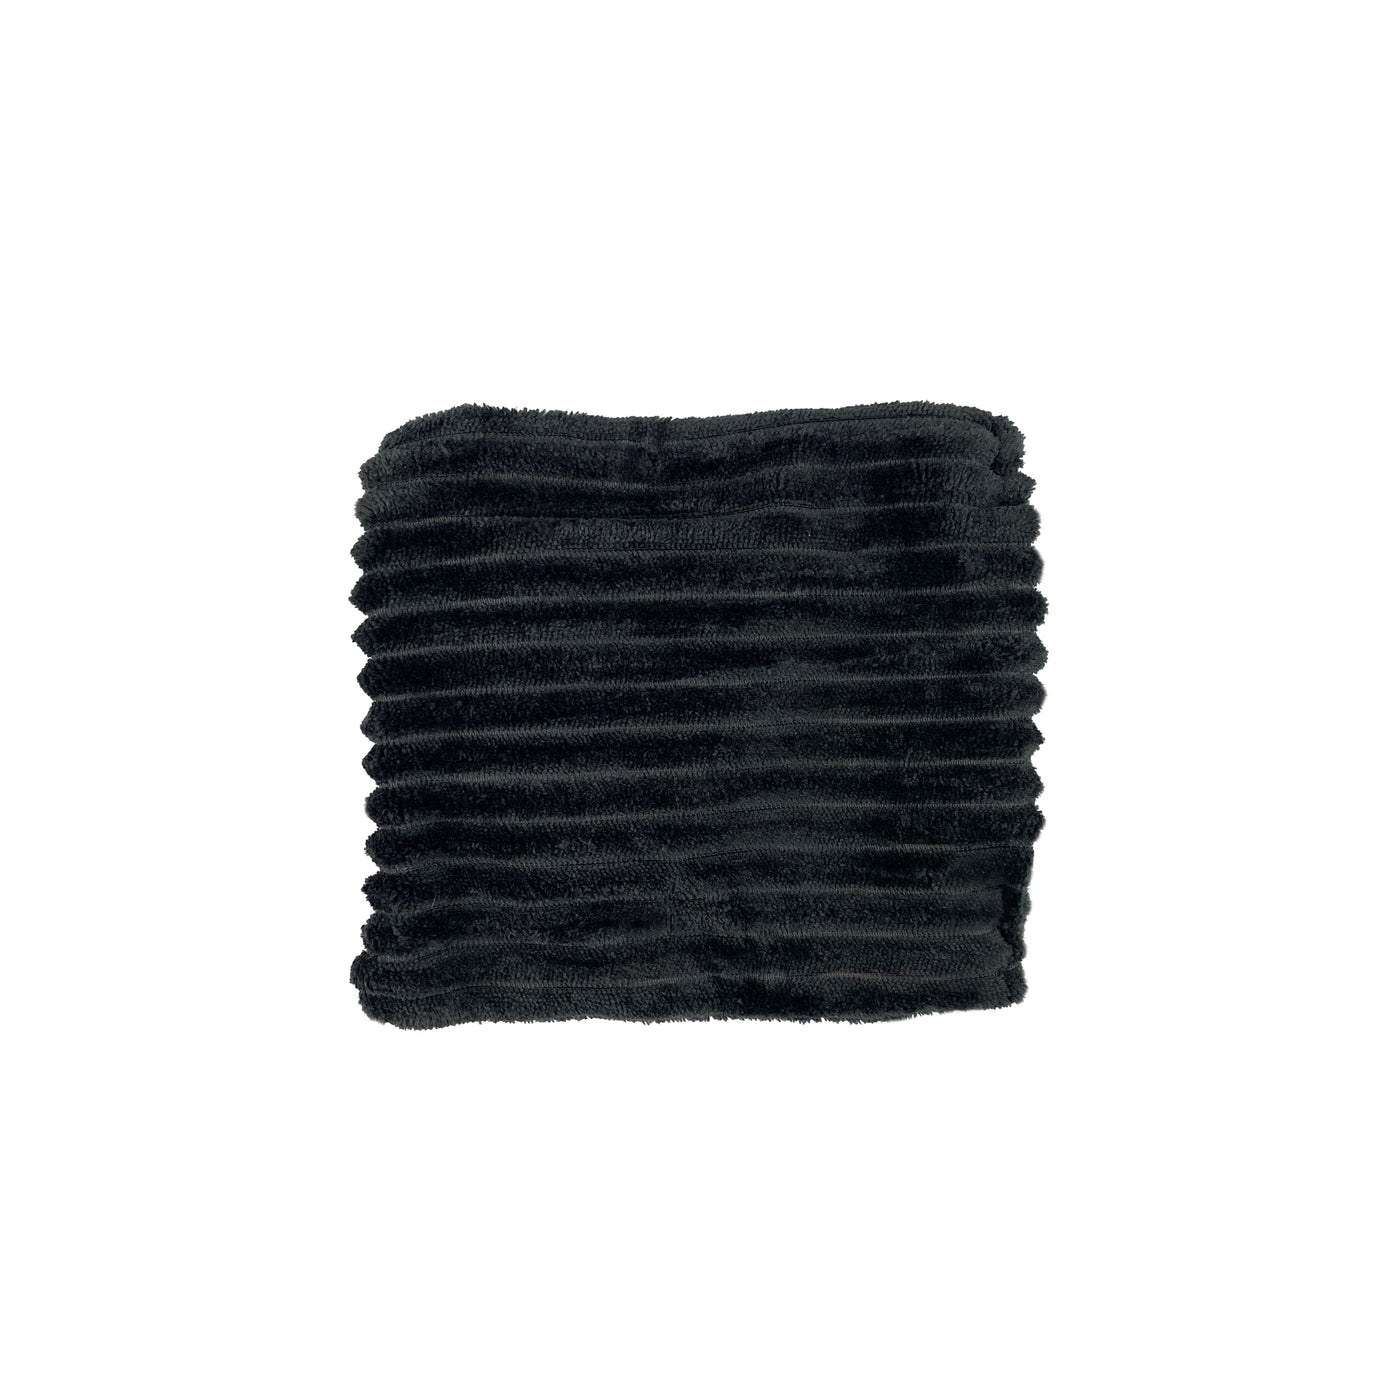 Small Wheat Heat Bag - Black Thick Cord